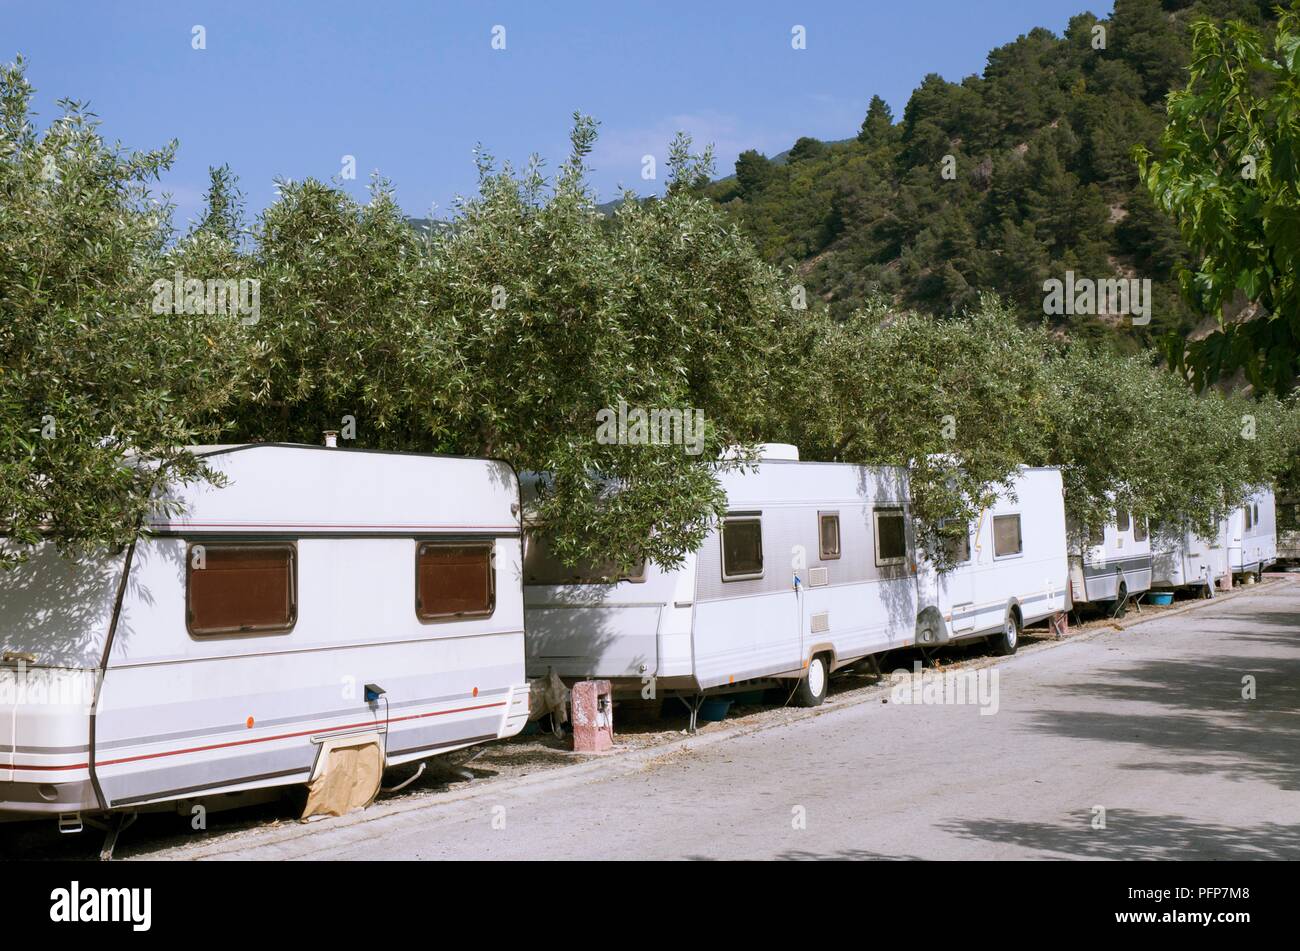 Greece, Euboea island, caravans parked under trees along street Stock Photo